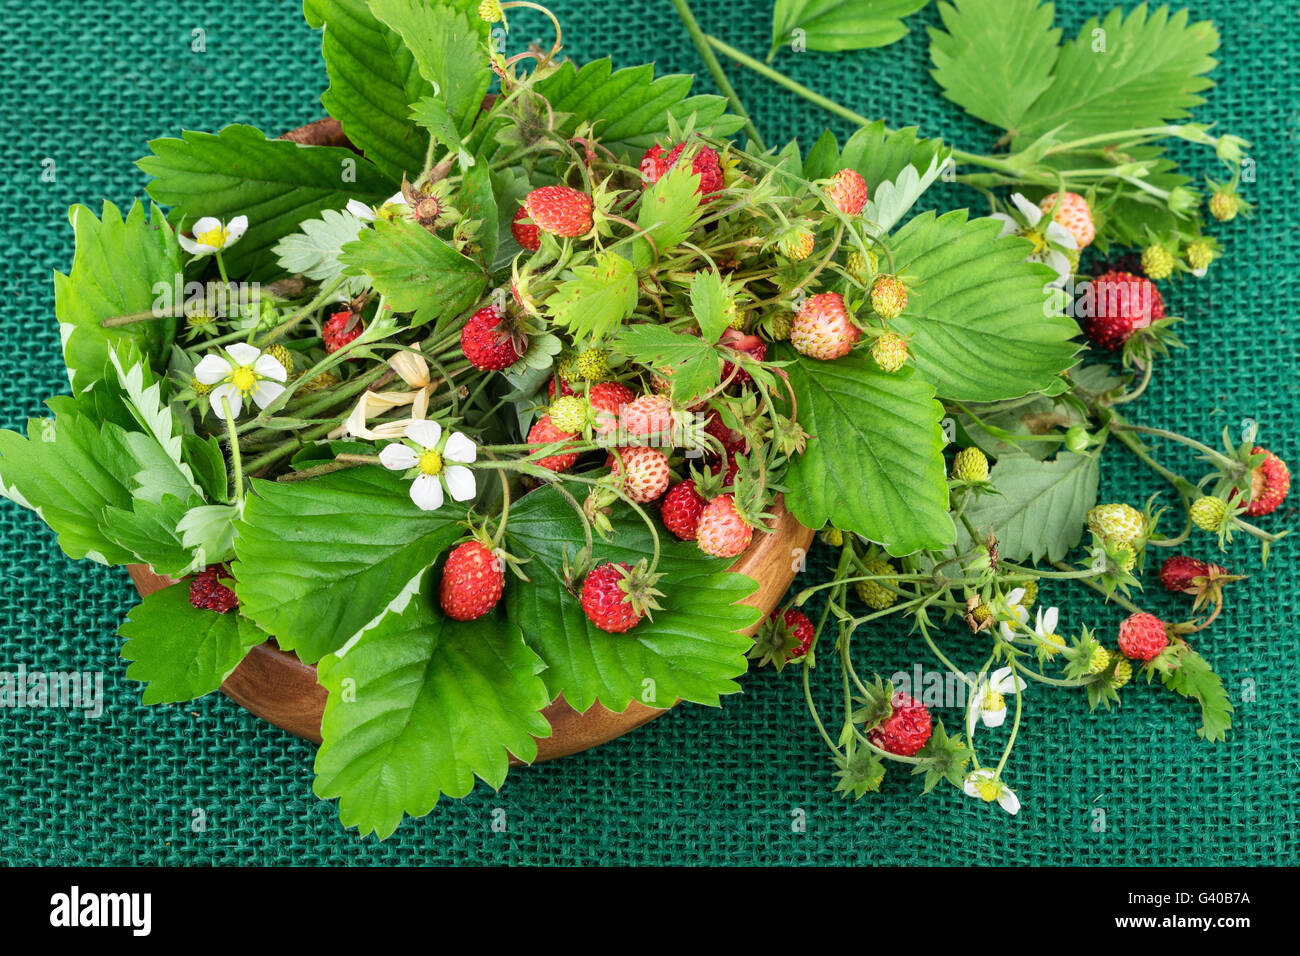 Wild strawberry or woodland strawberry on jute fabric background. Stock Photo